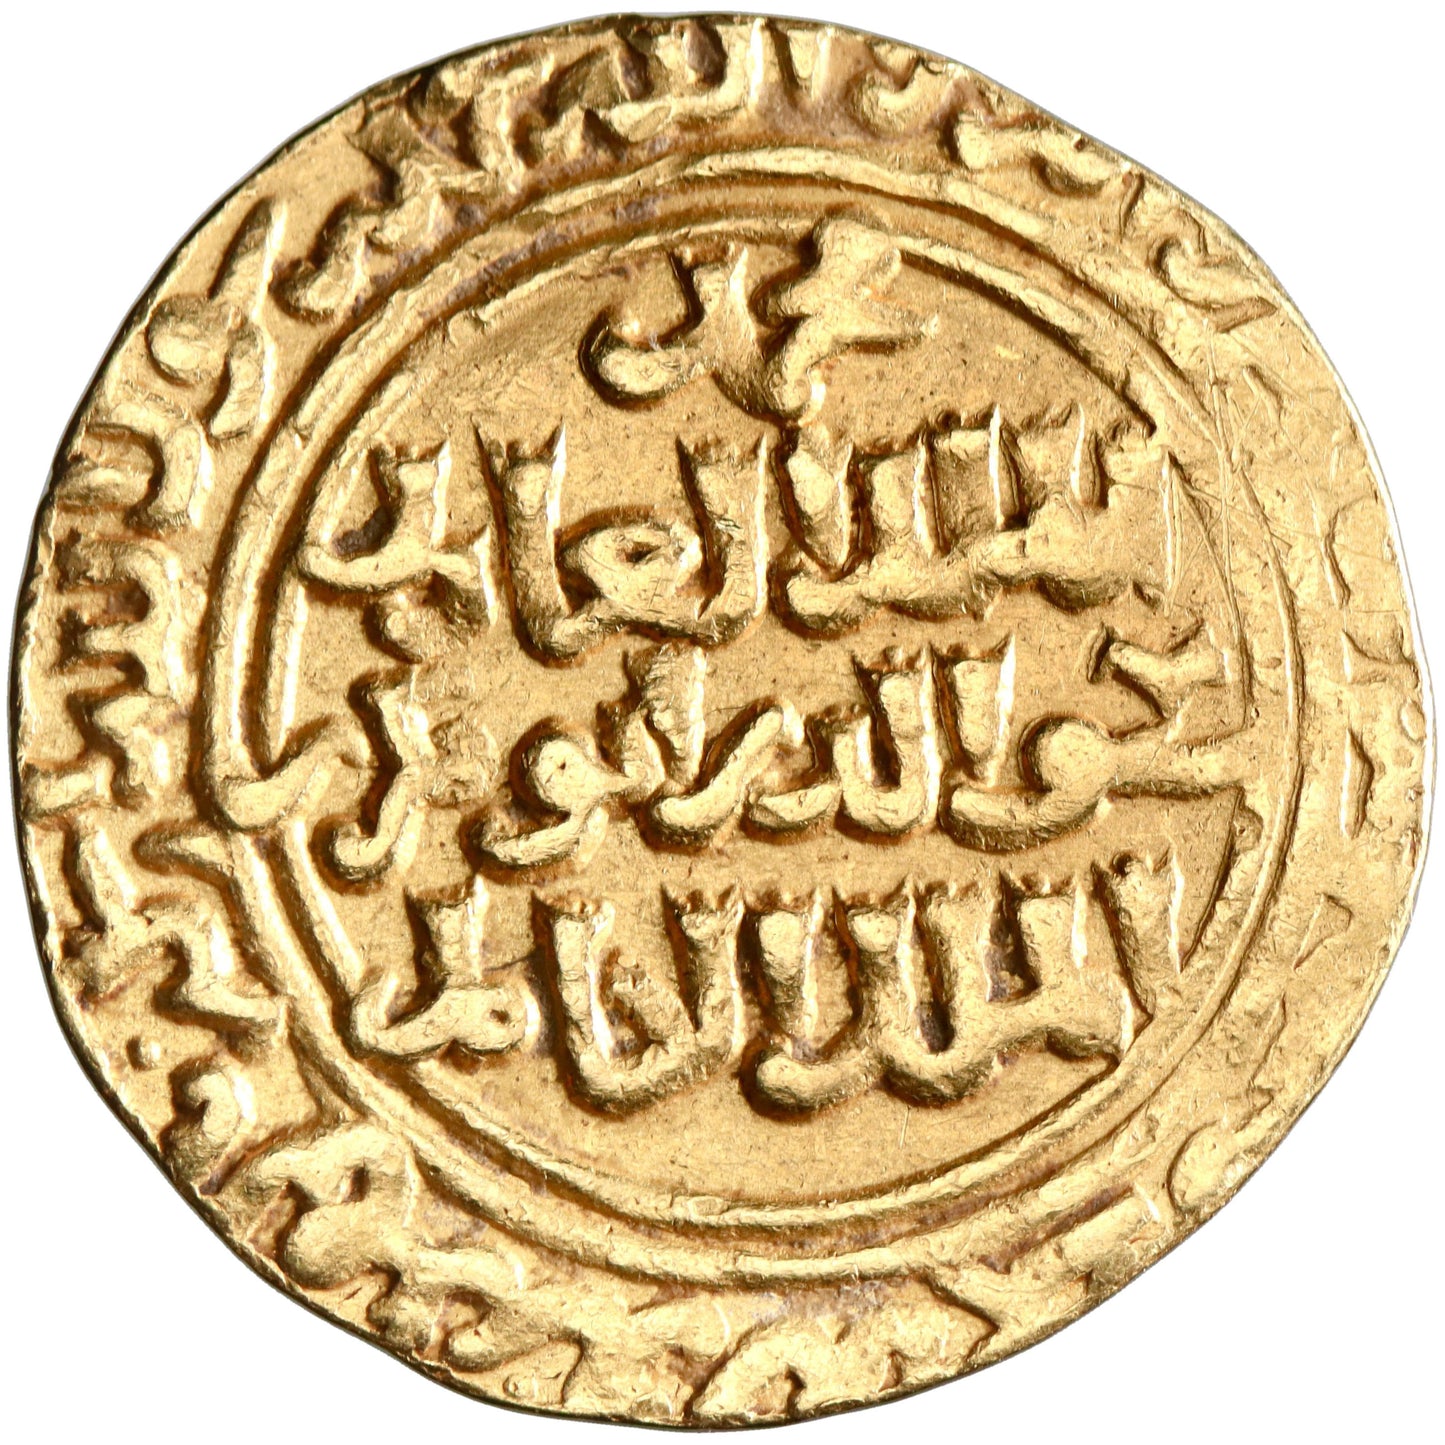 Ayyubid, Abu Bakr II, gold dinar, al-Qahira (Cairo) mint, AH 635, citing al-Mustansir